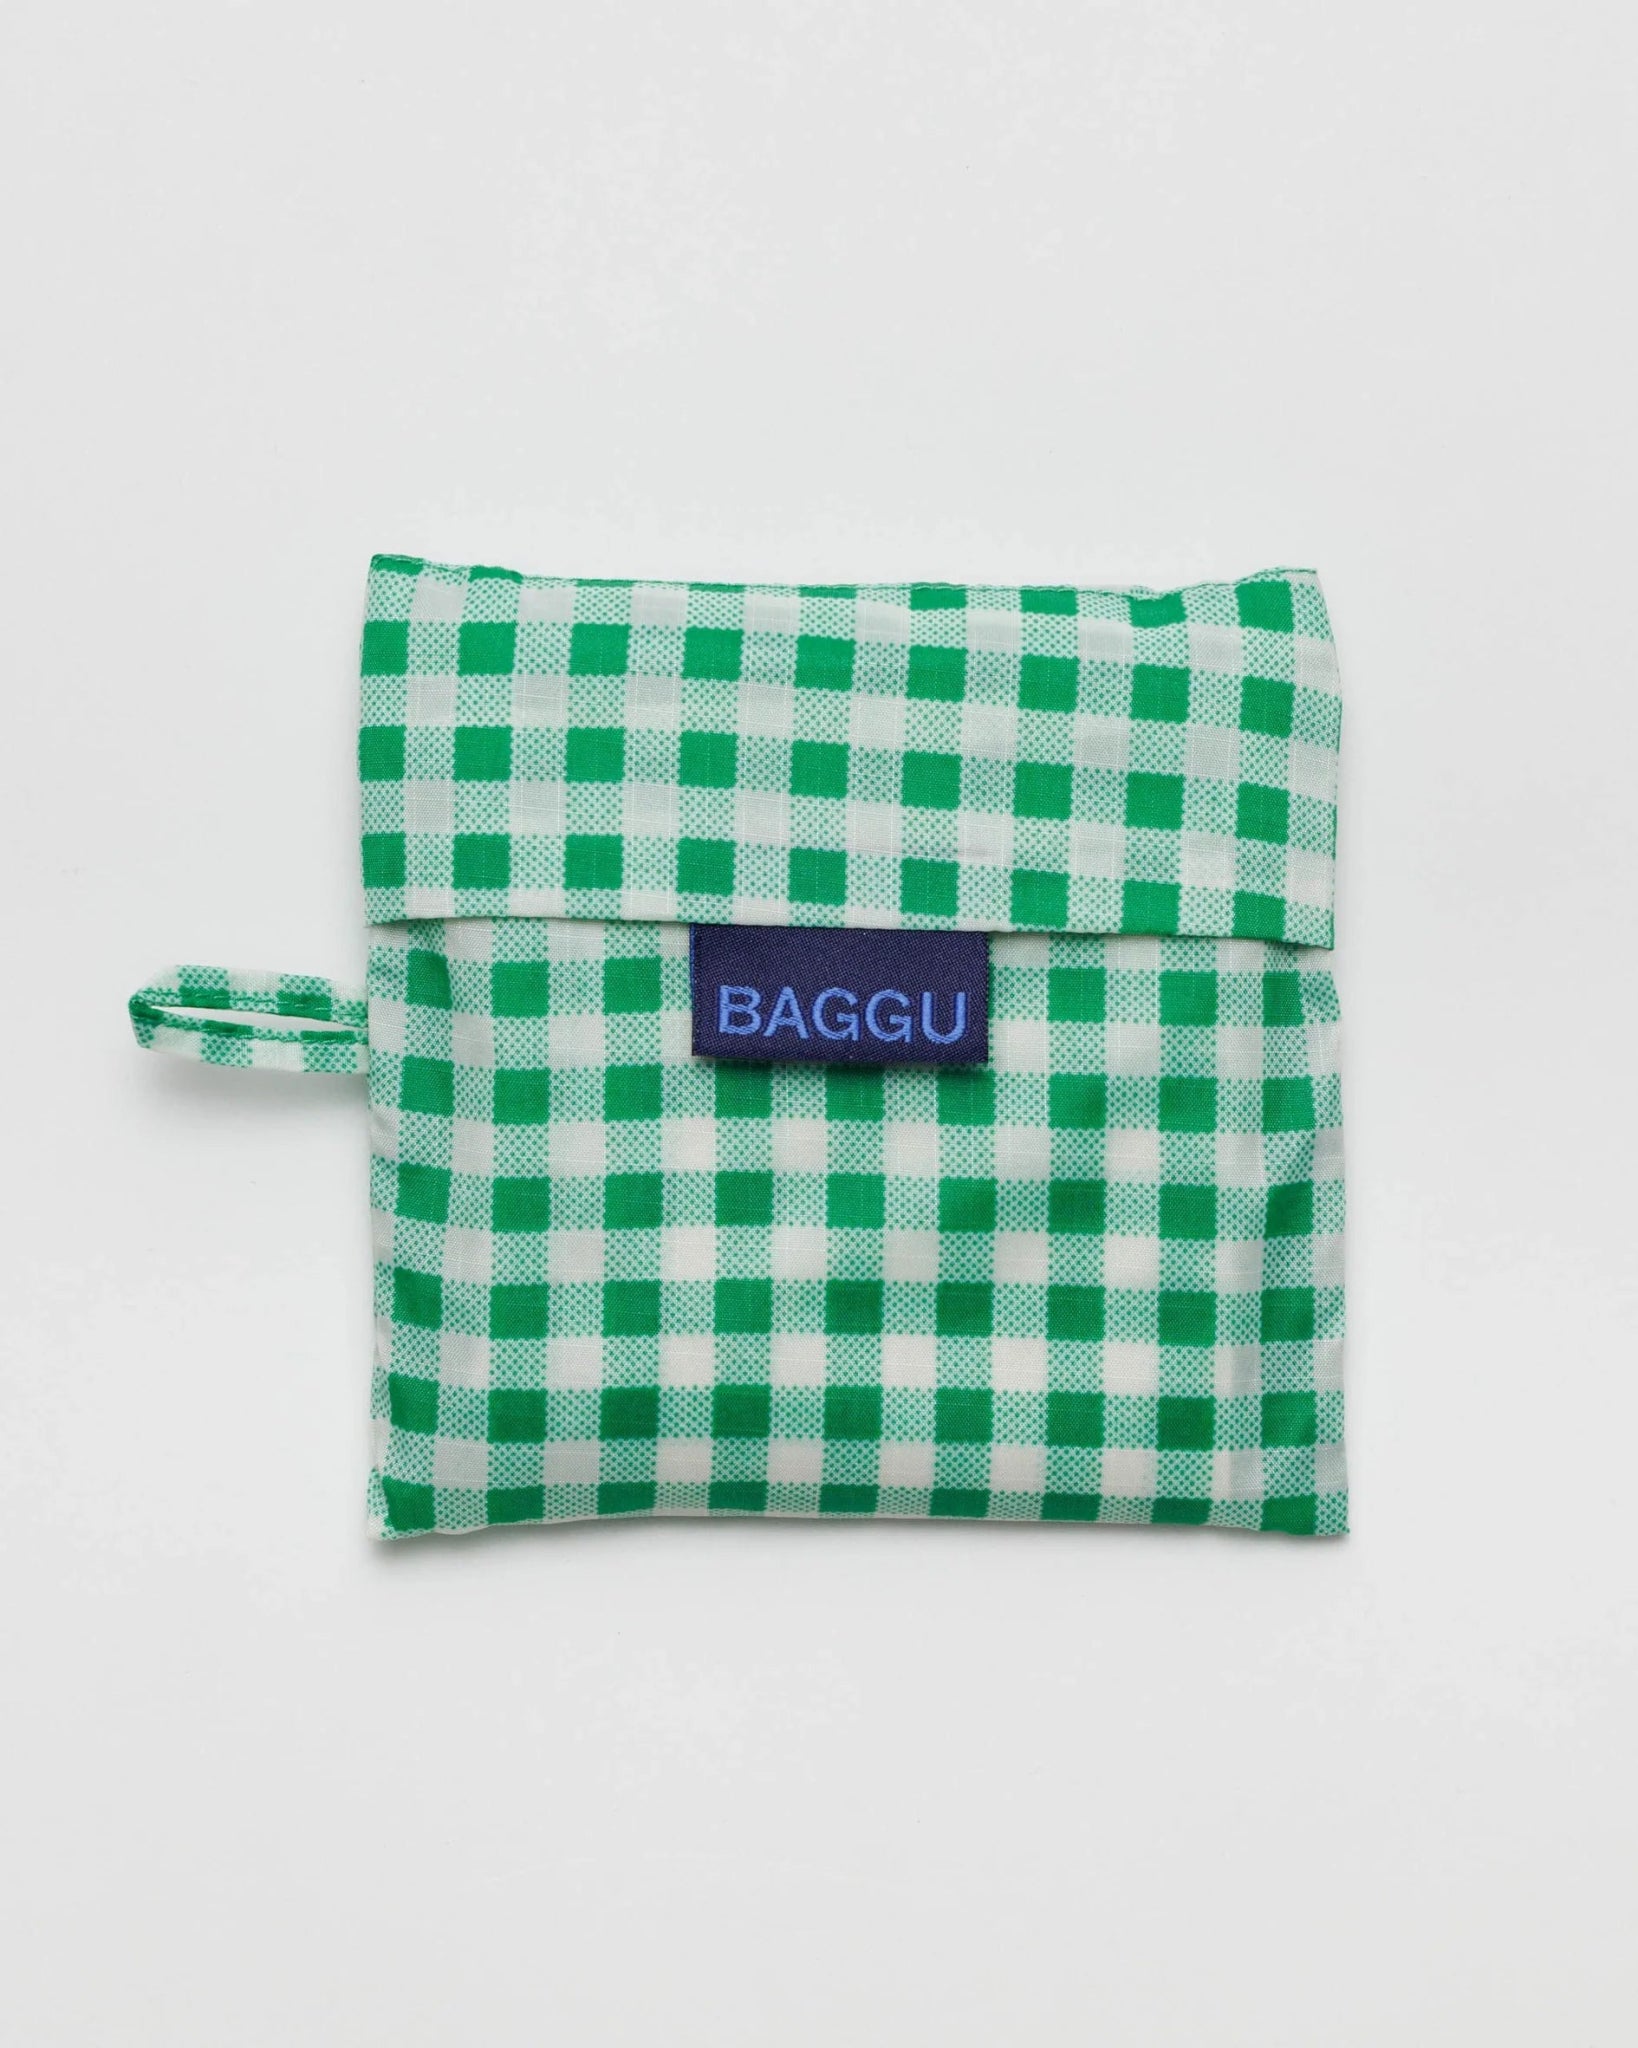 BagguBAGGU Standard - Green GinghamPreston Apothecary